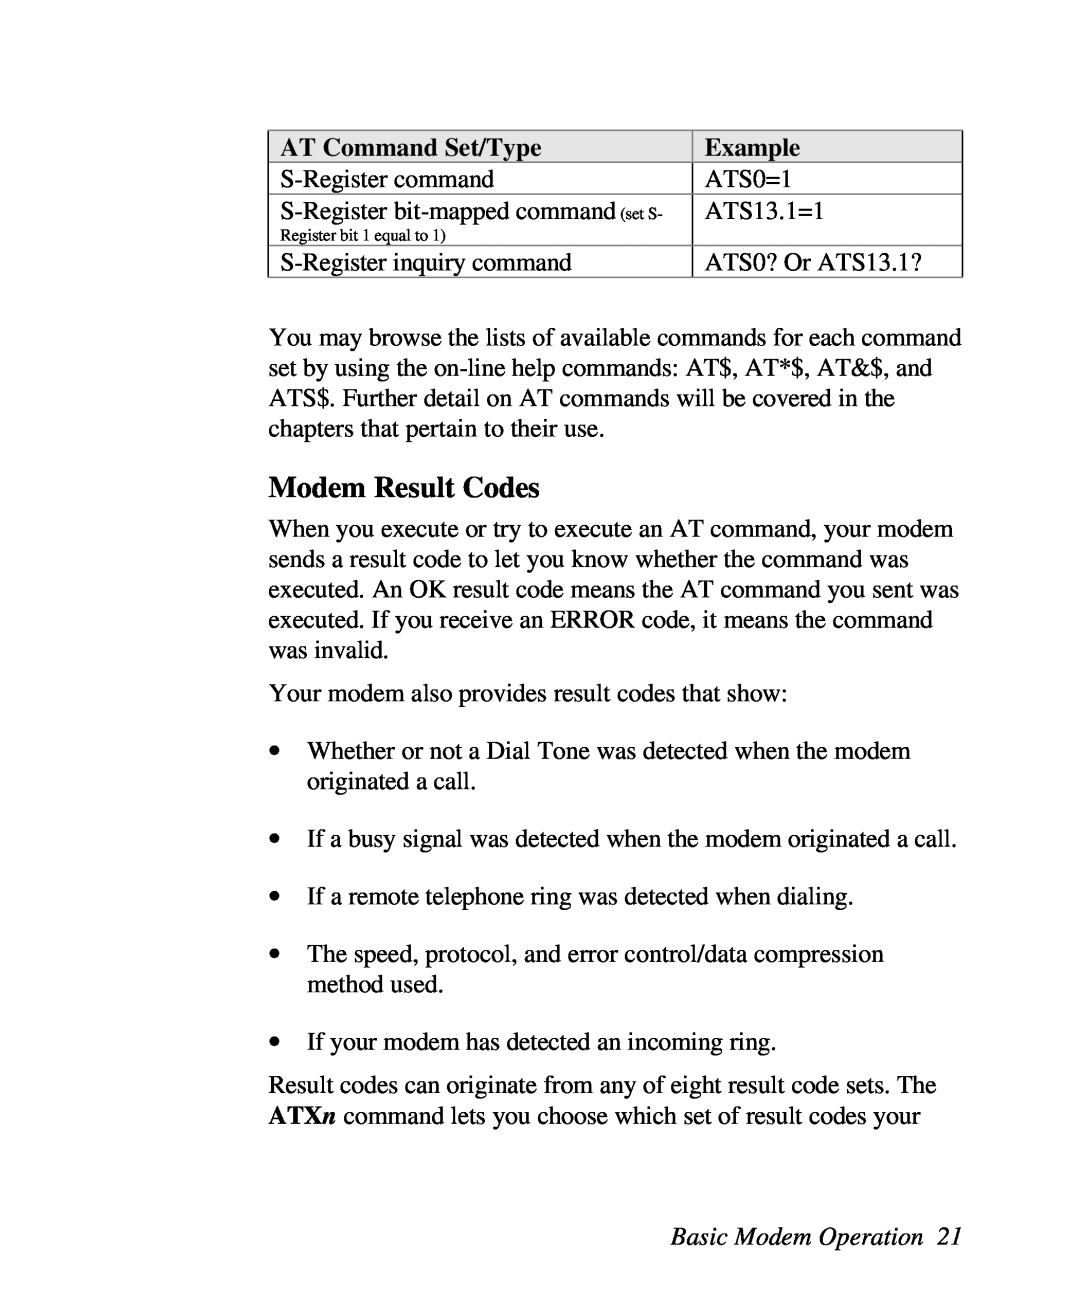 ZyXEL Communications U-336R/RE manual Modem Result Codes, Basic Modem Operation 